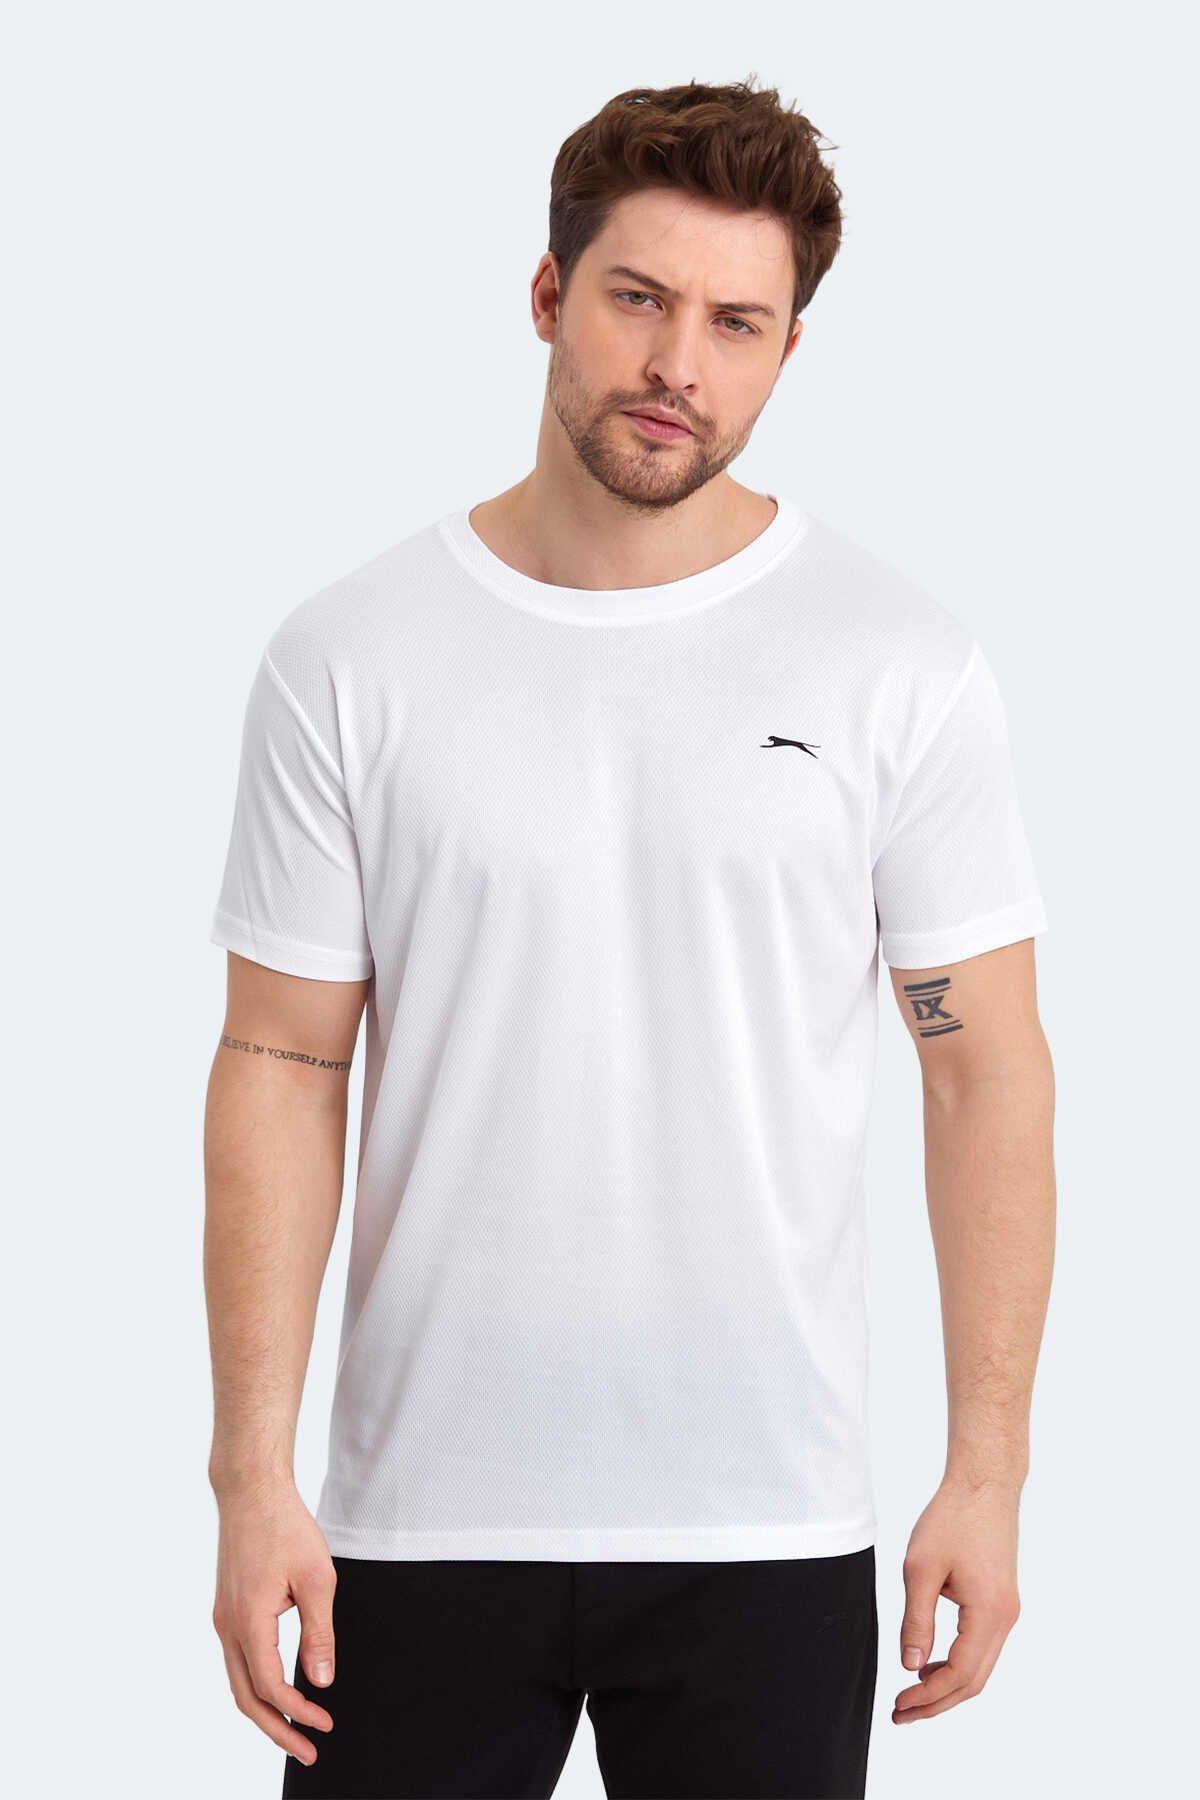 Slazenger - Slazenger ODALIS I Erkek Kısa Kol T-Shirt Beyaz